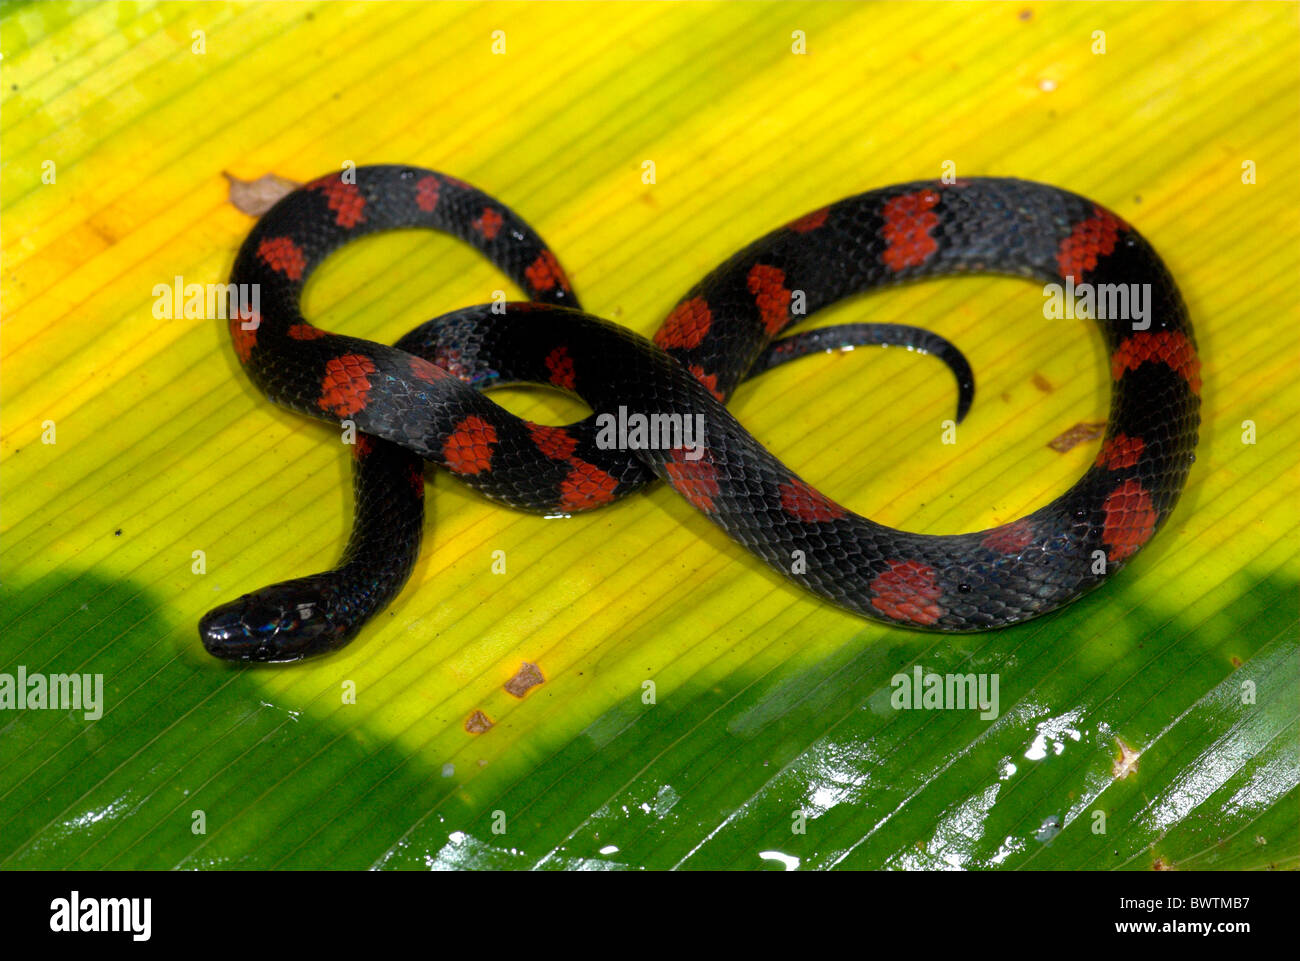 Tierra Colombiana Geophis brachcephalus serpiente en la selva de Costa Rica Foto de stock